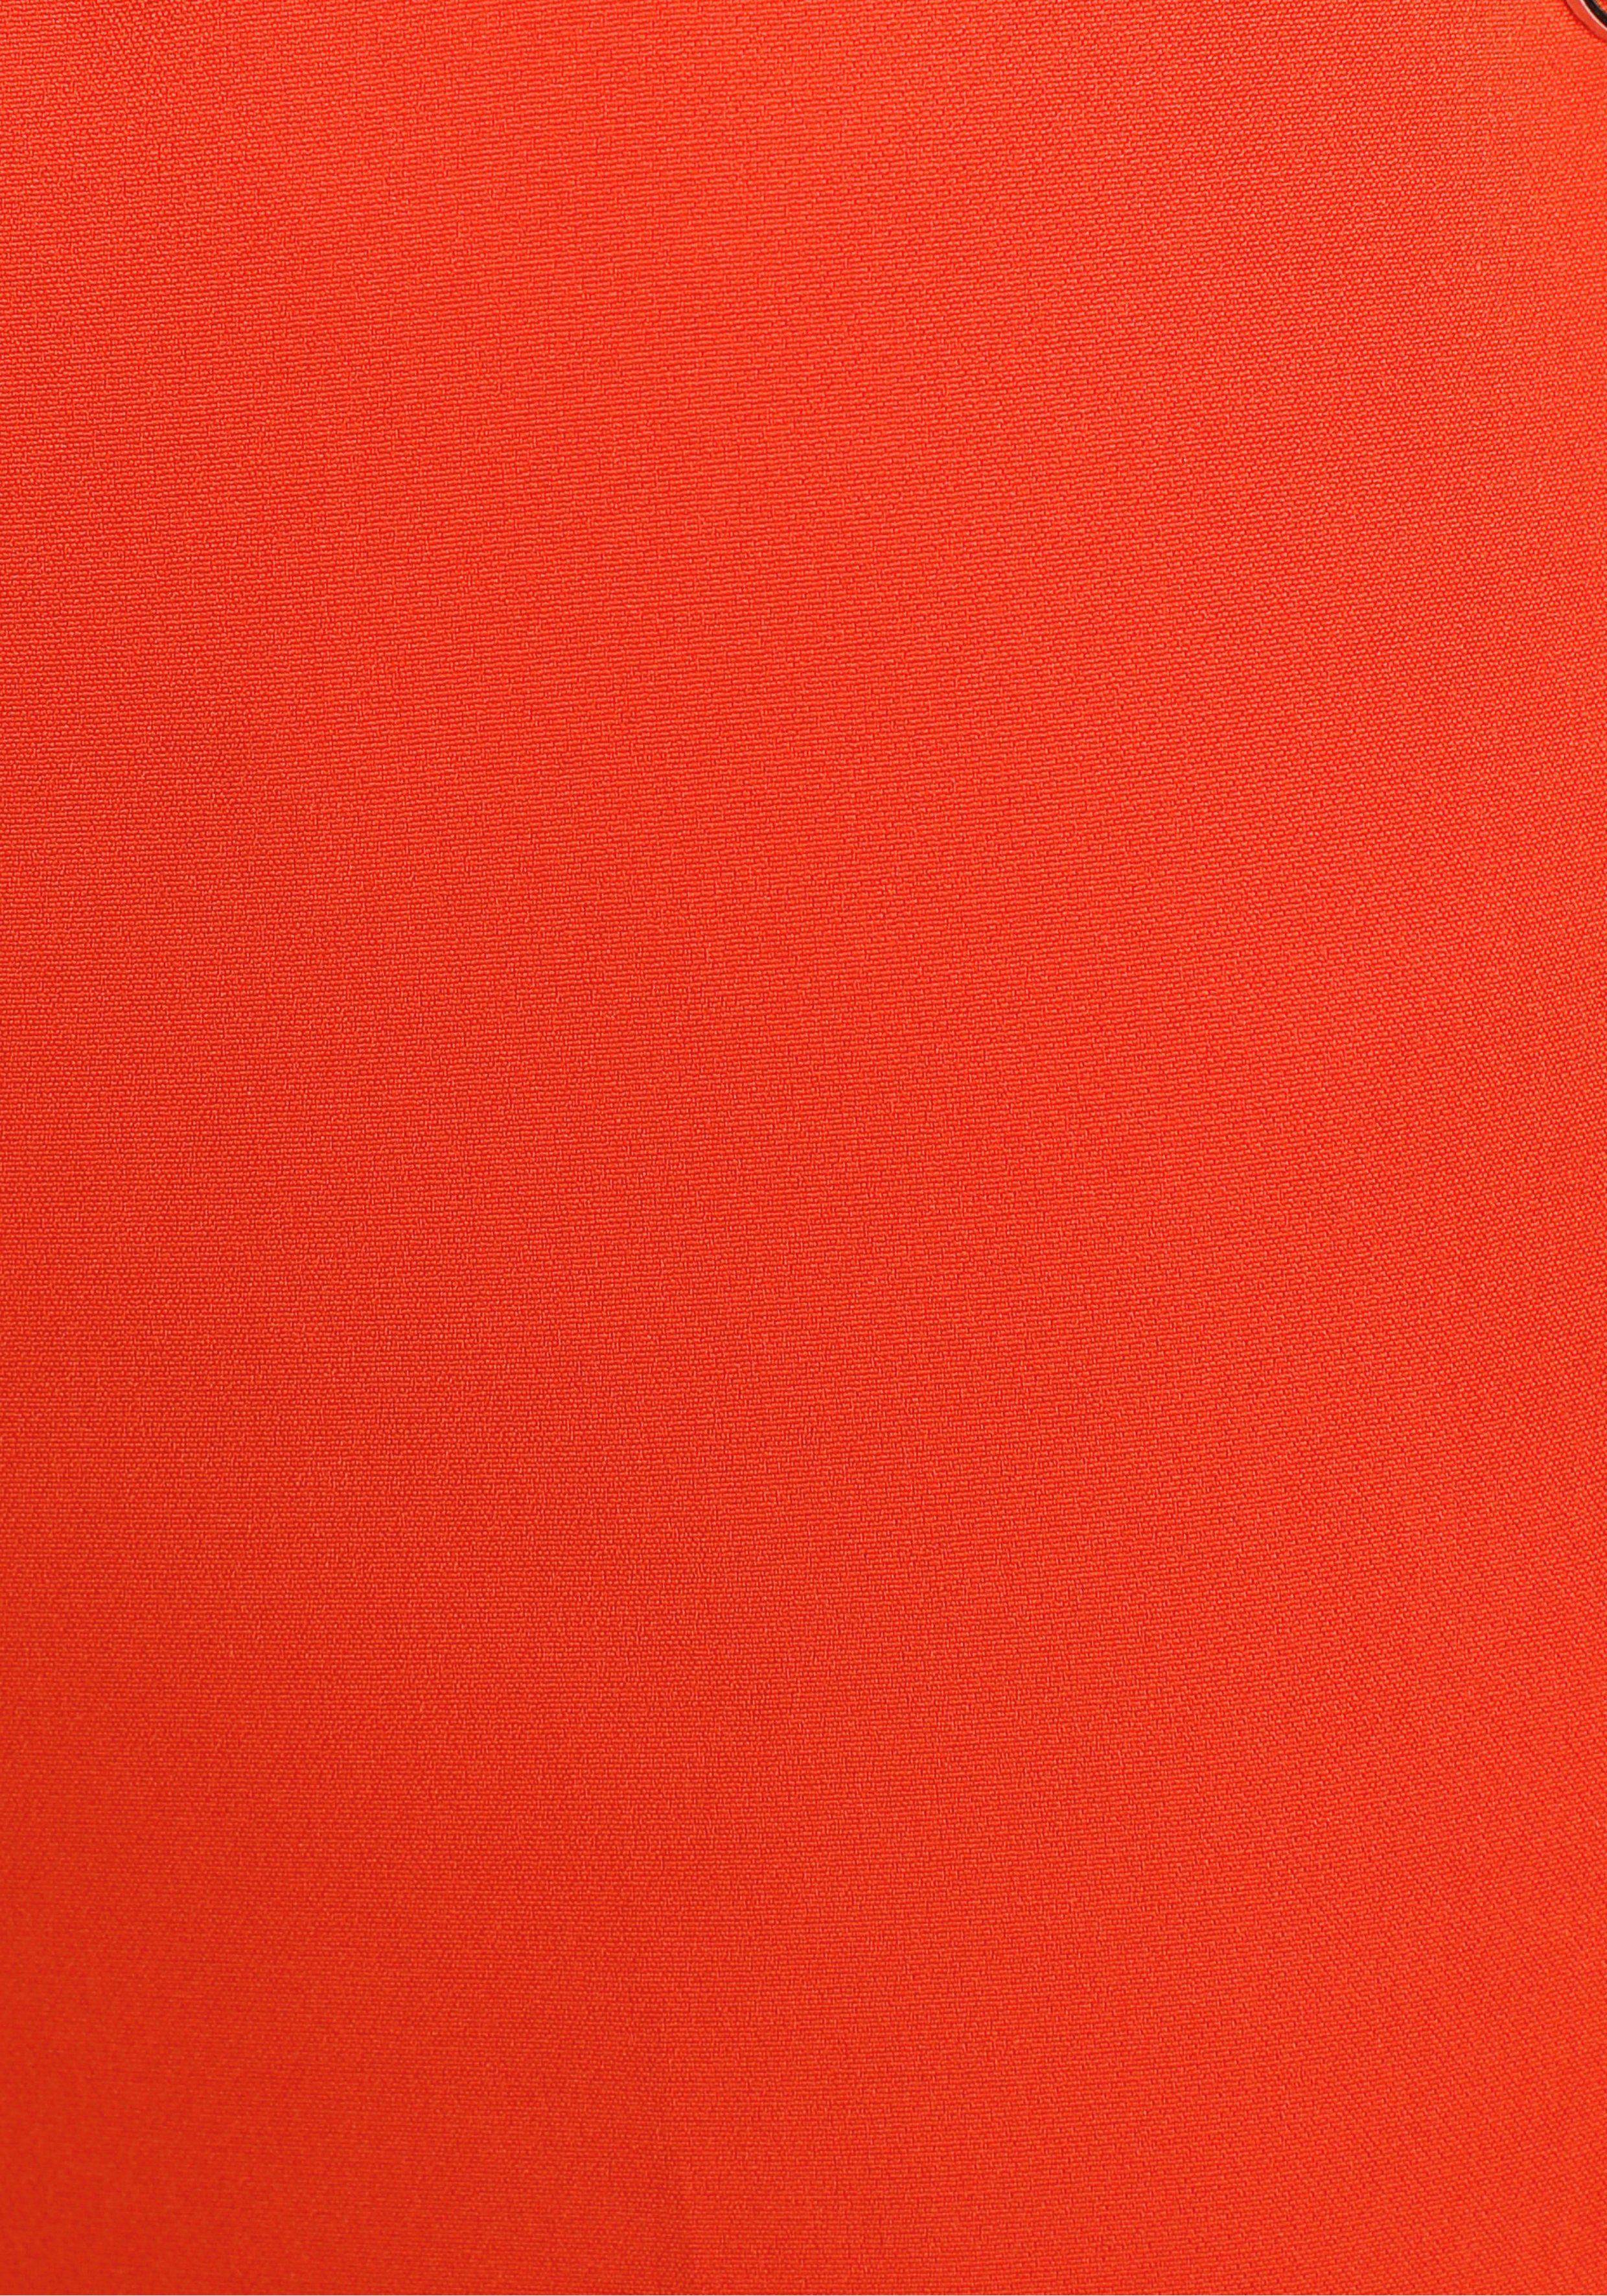 Anzughose orange nachhaltigem Tamaris Trendfarben Material) in aus (Hose